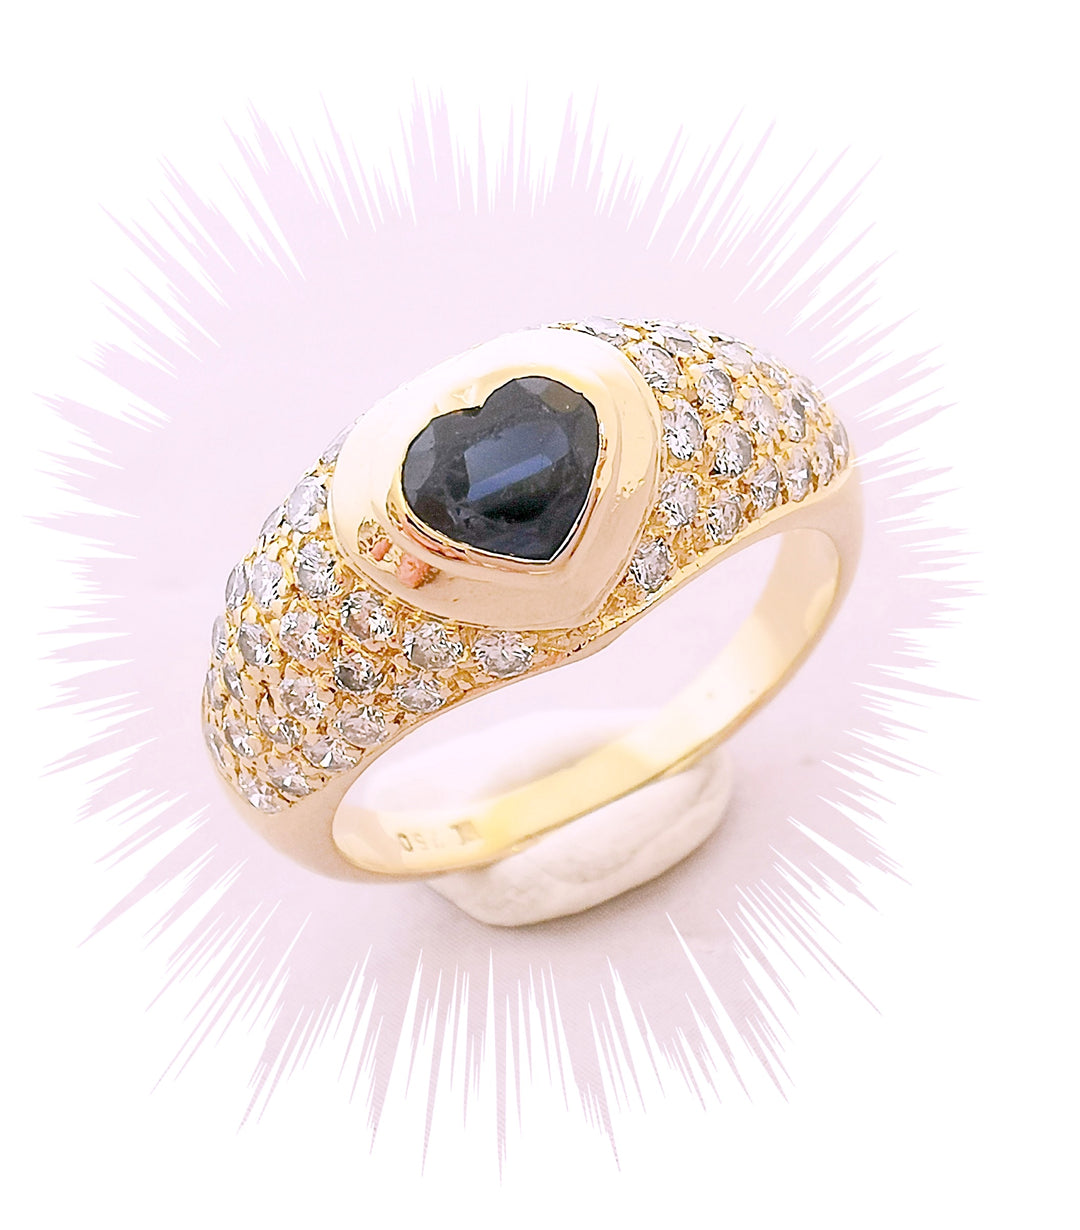 Bague Saphir en coeur / Diamants / Or Jaune 18 K / (750°/°°) / 18 carats